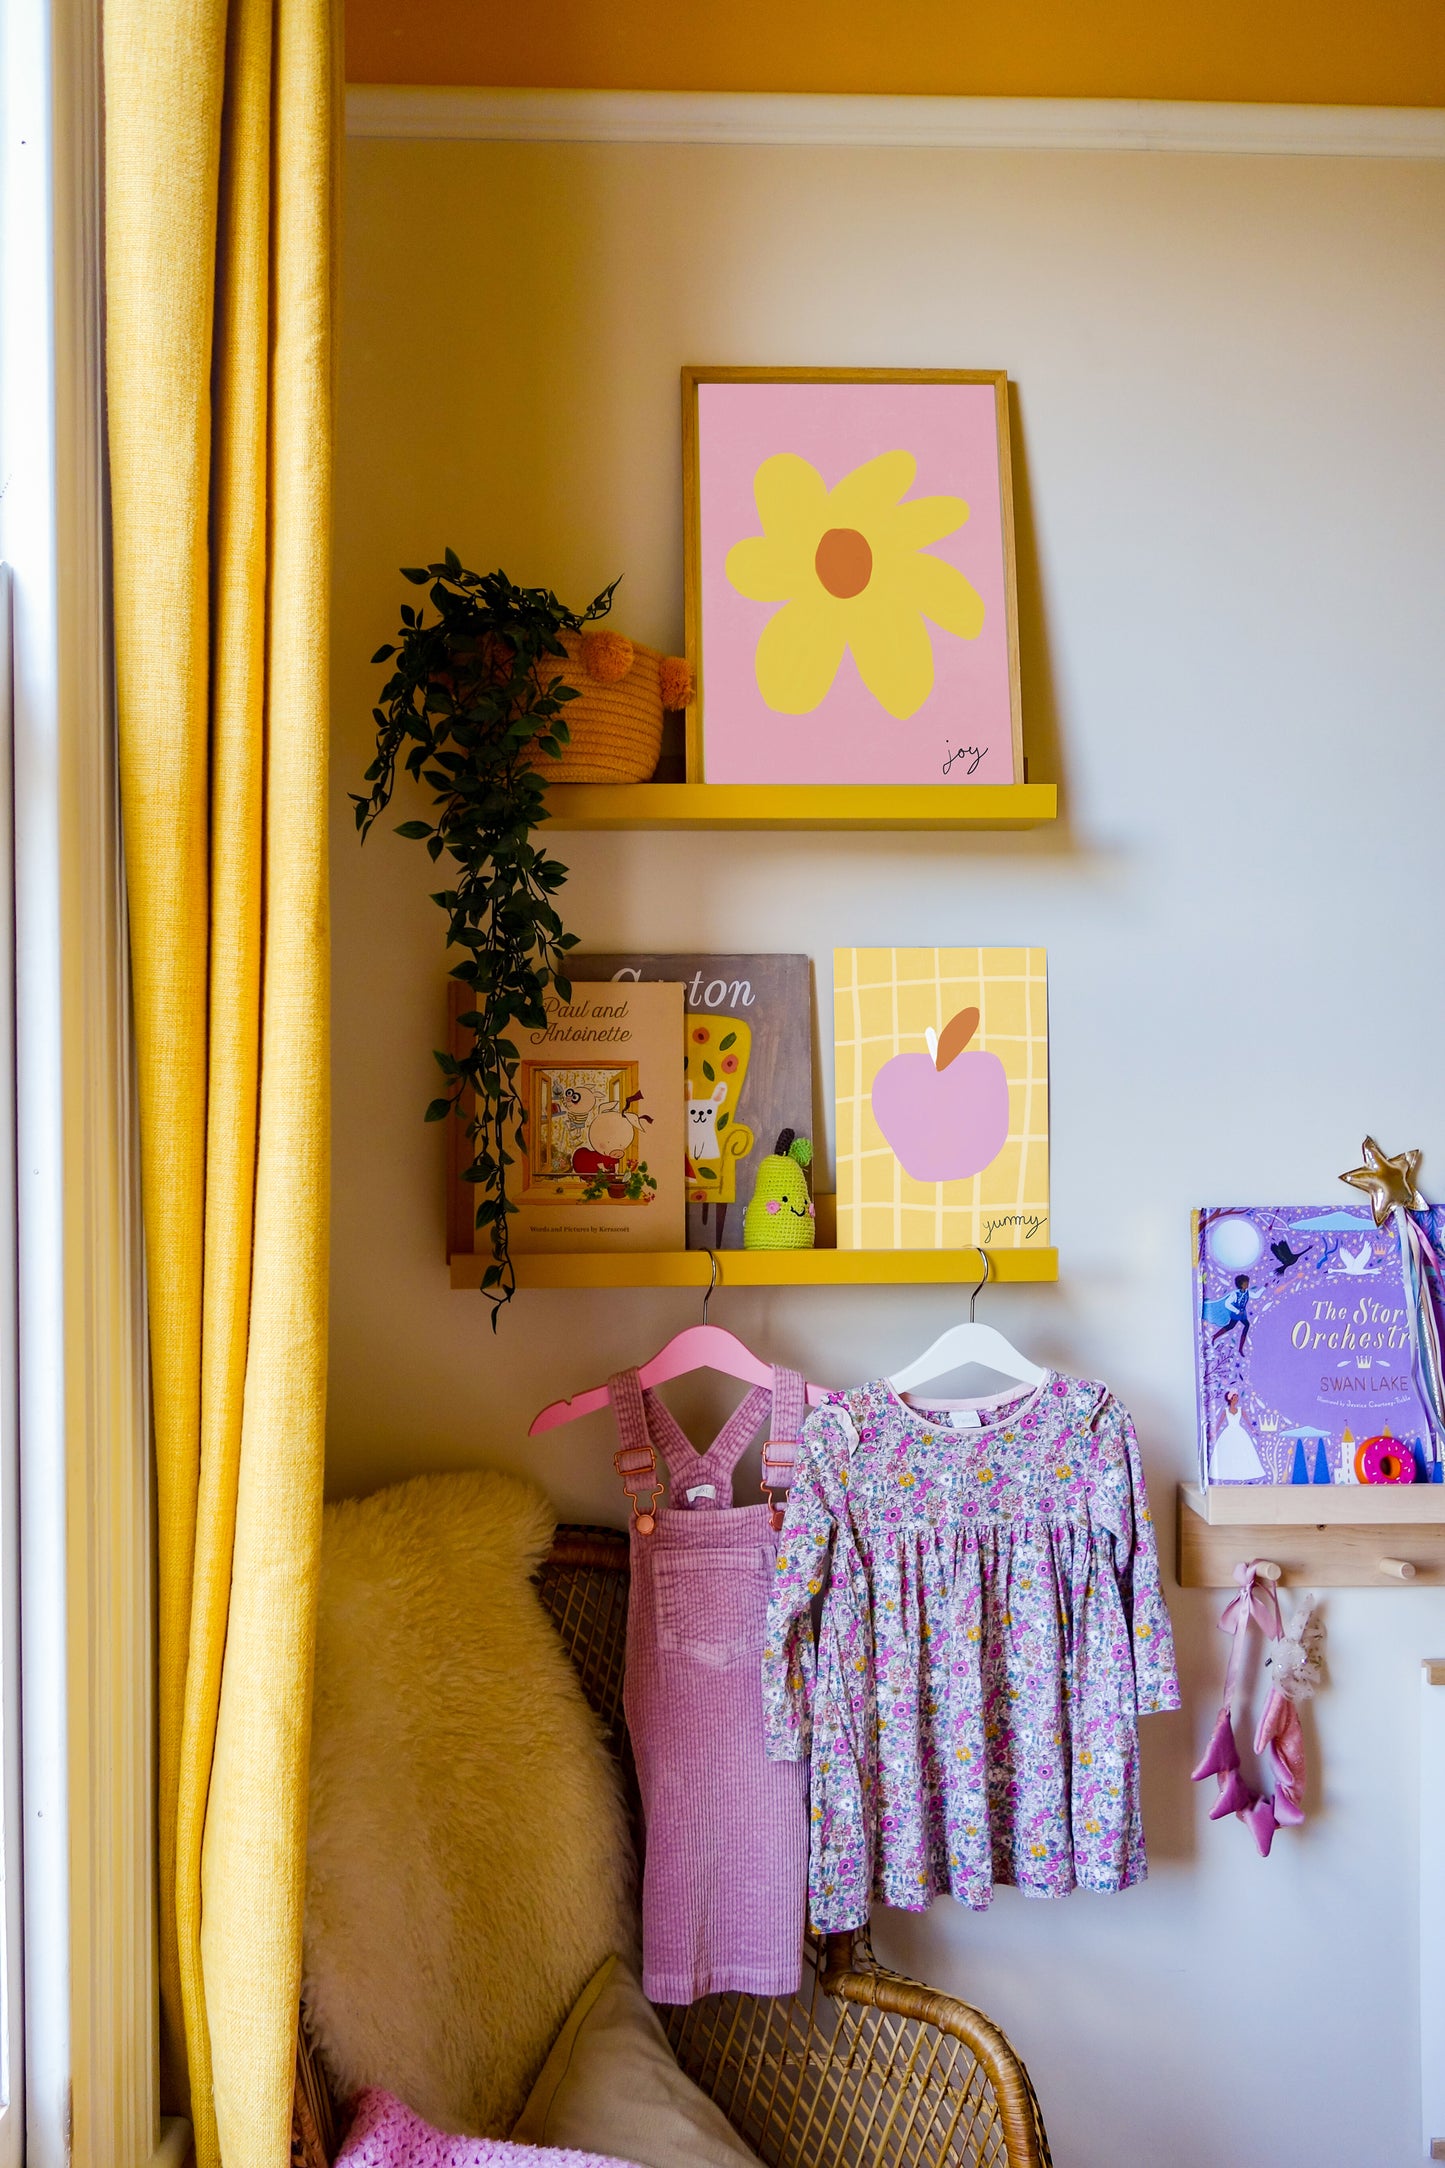 Joy Flower Print - Pink, Yellow, Brown Fine Art Print